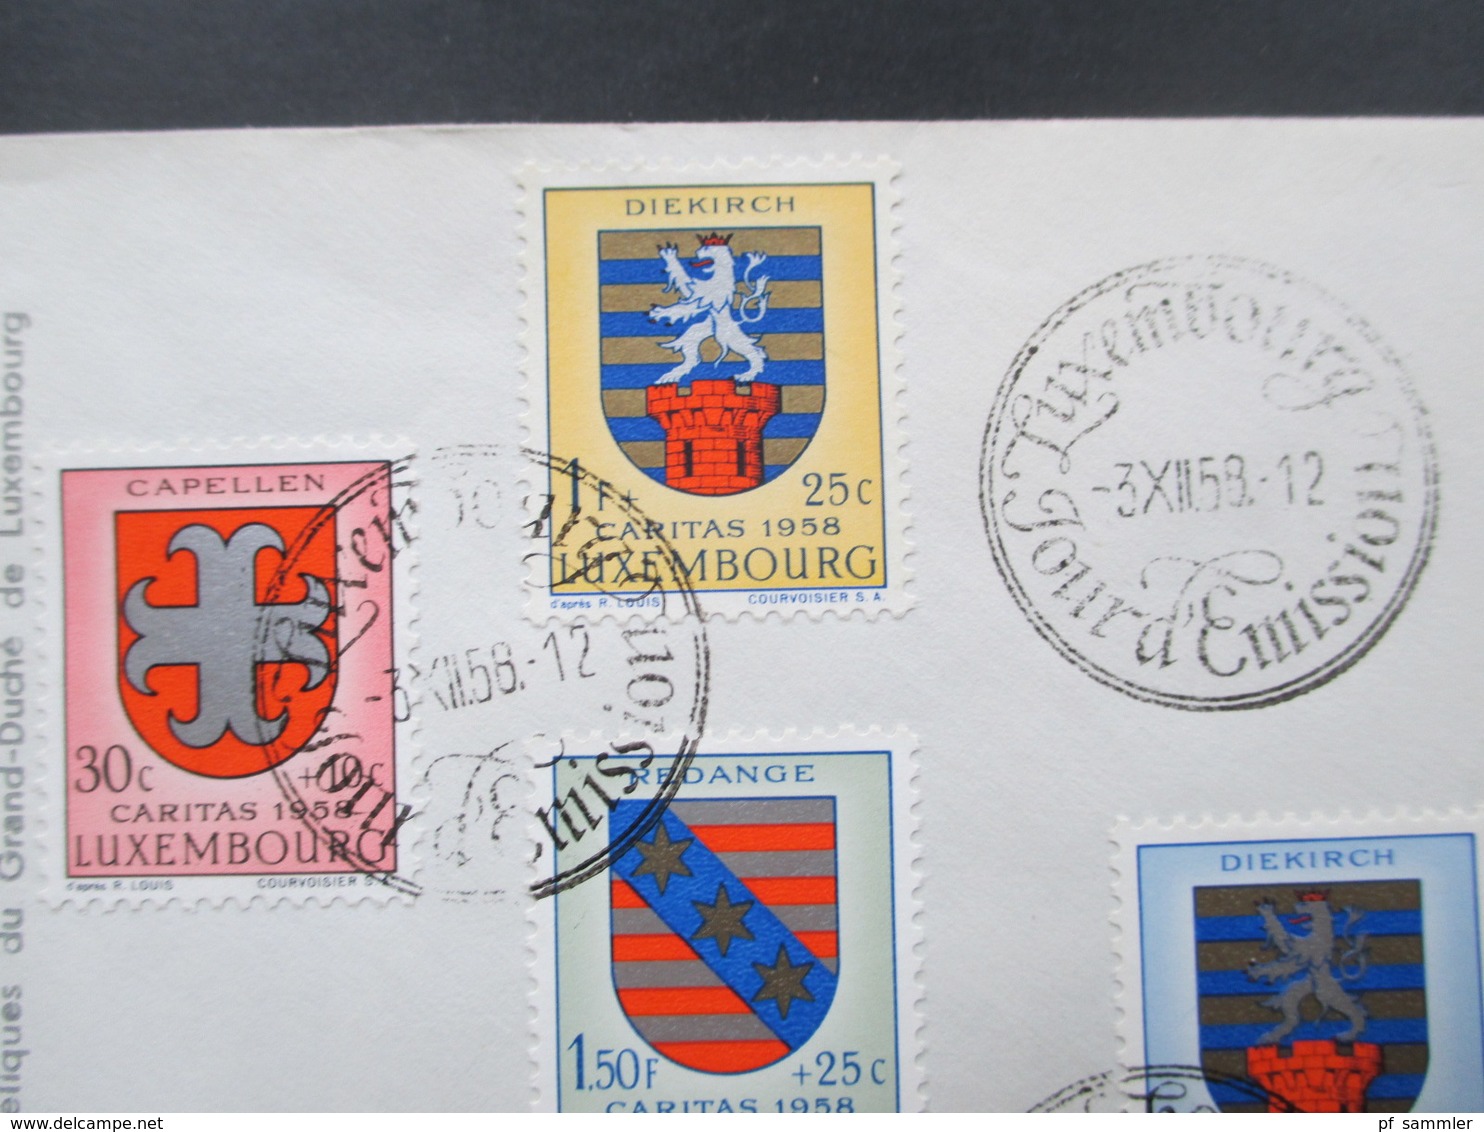 Luxemburg 1958 Kantonalwappen III FDC Caritas 1958 Diekirch FDC No 003327 - Covers & Documents